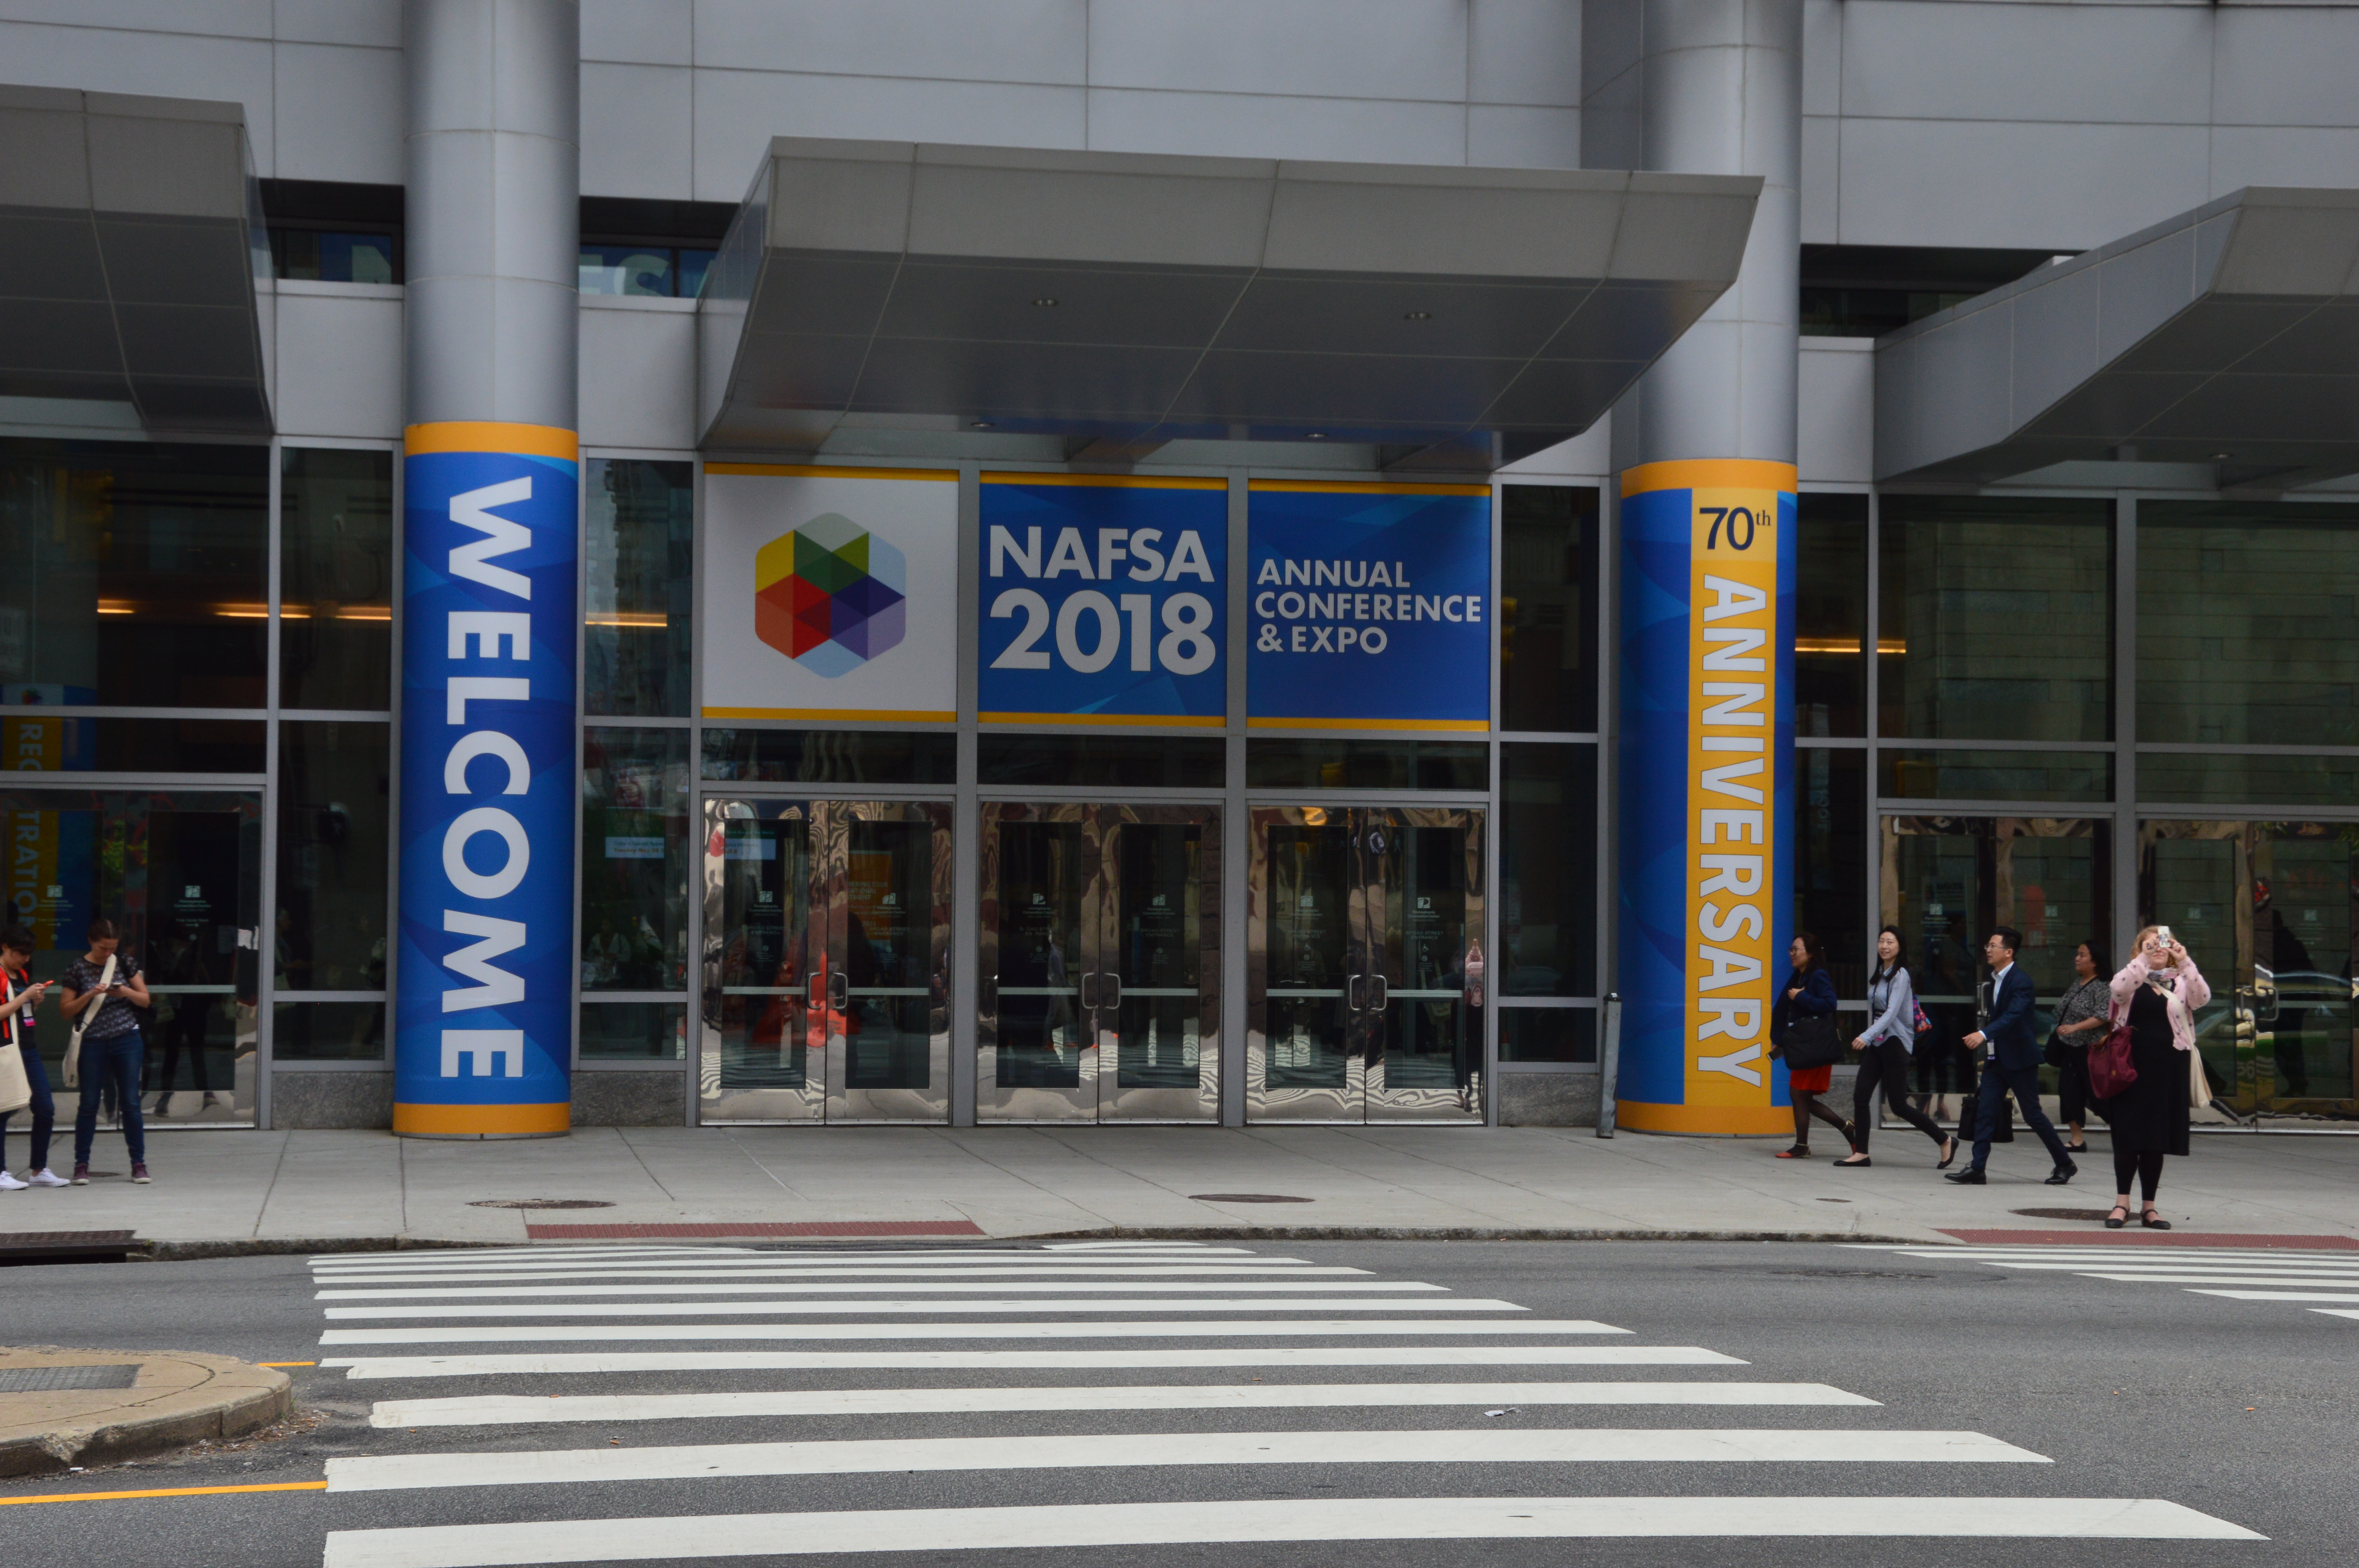 Venue of NAFSA conference